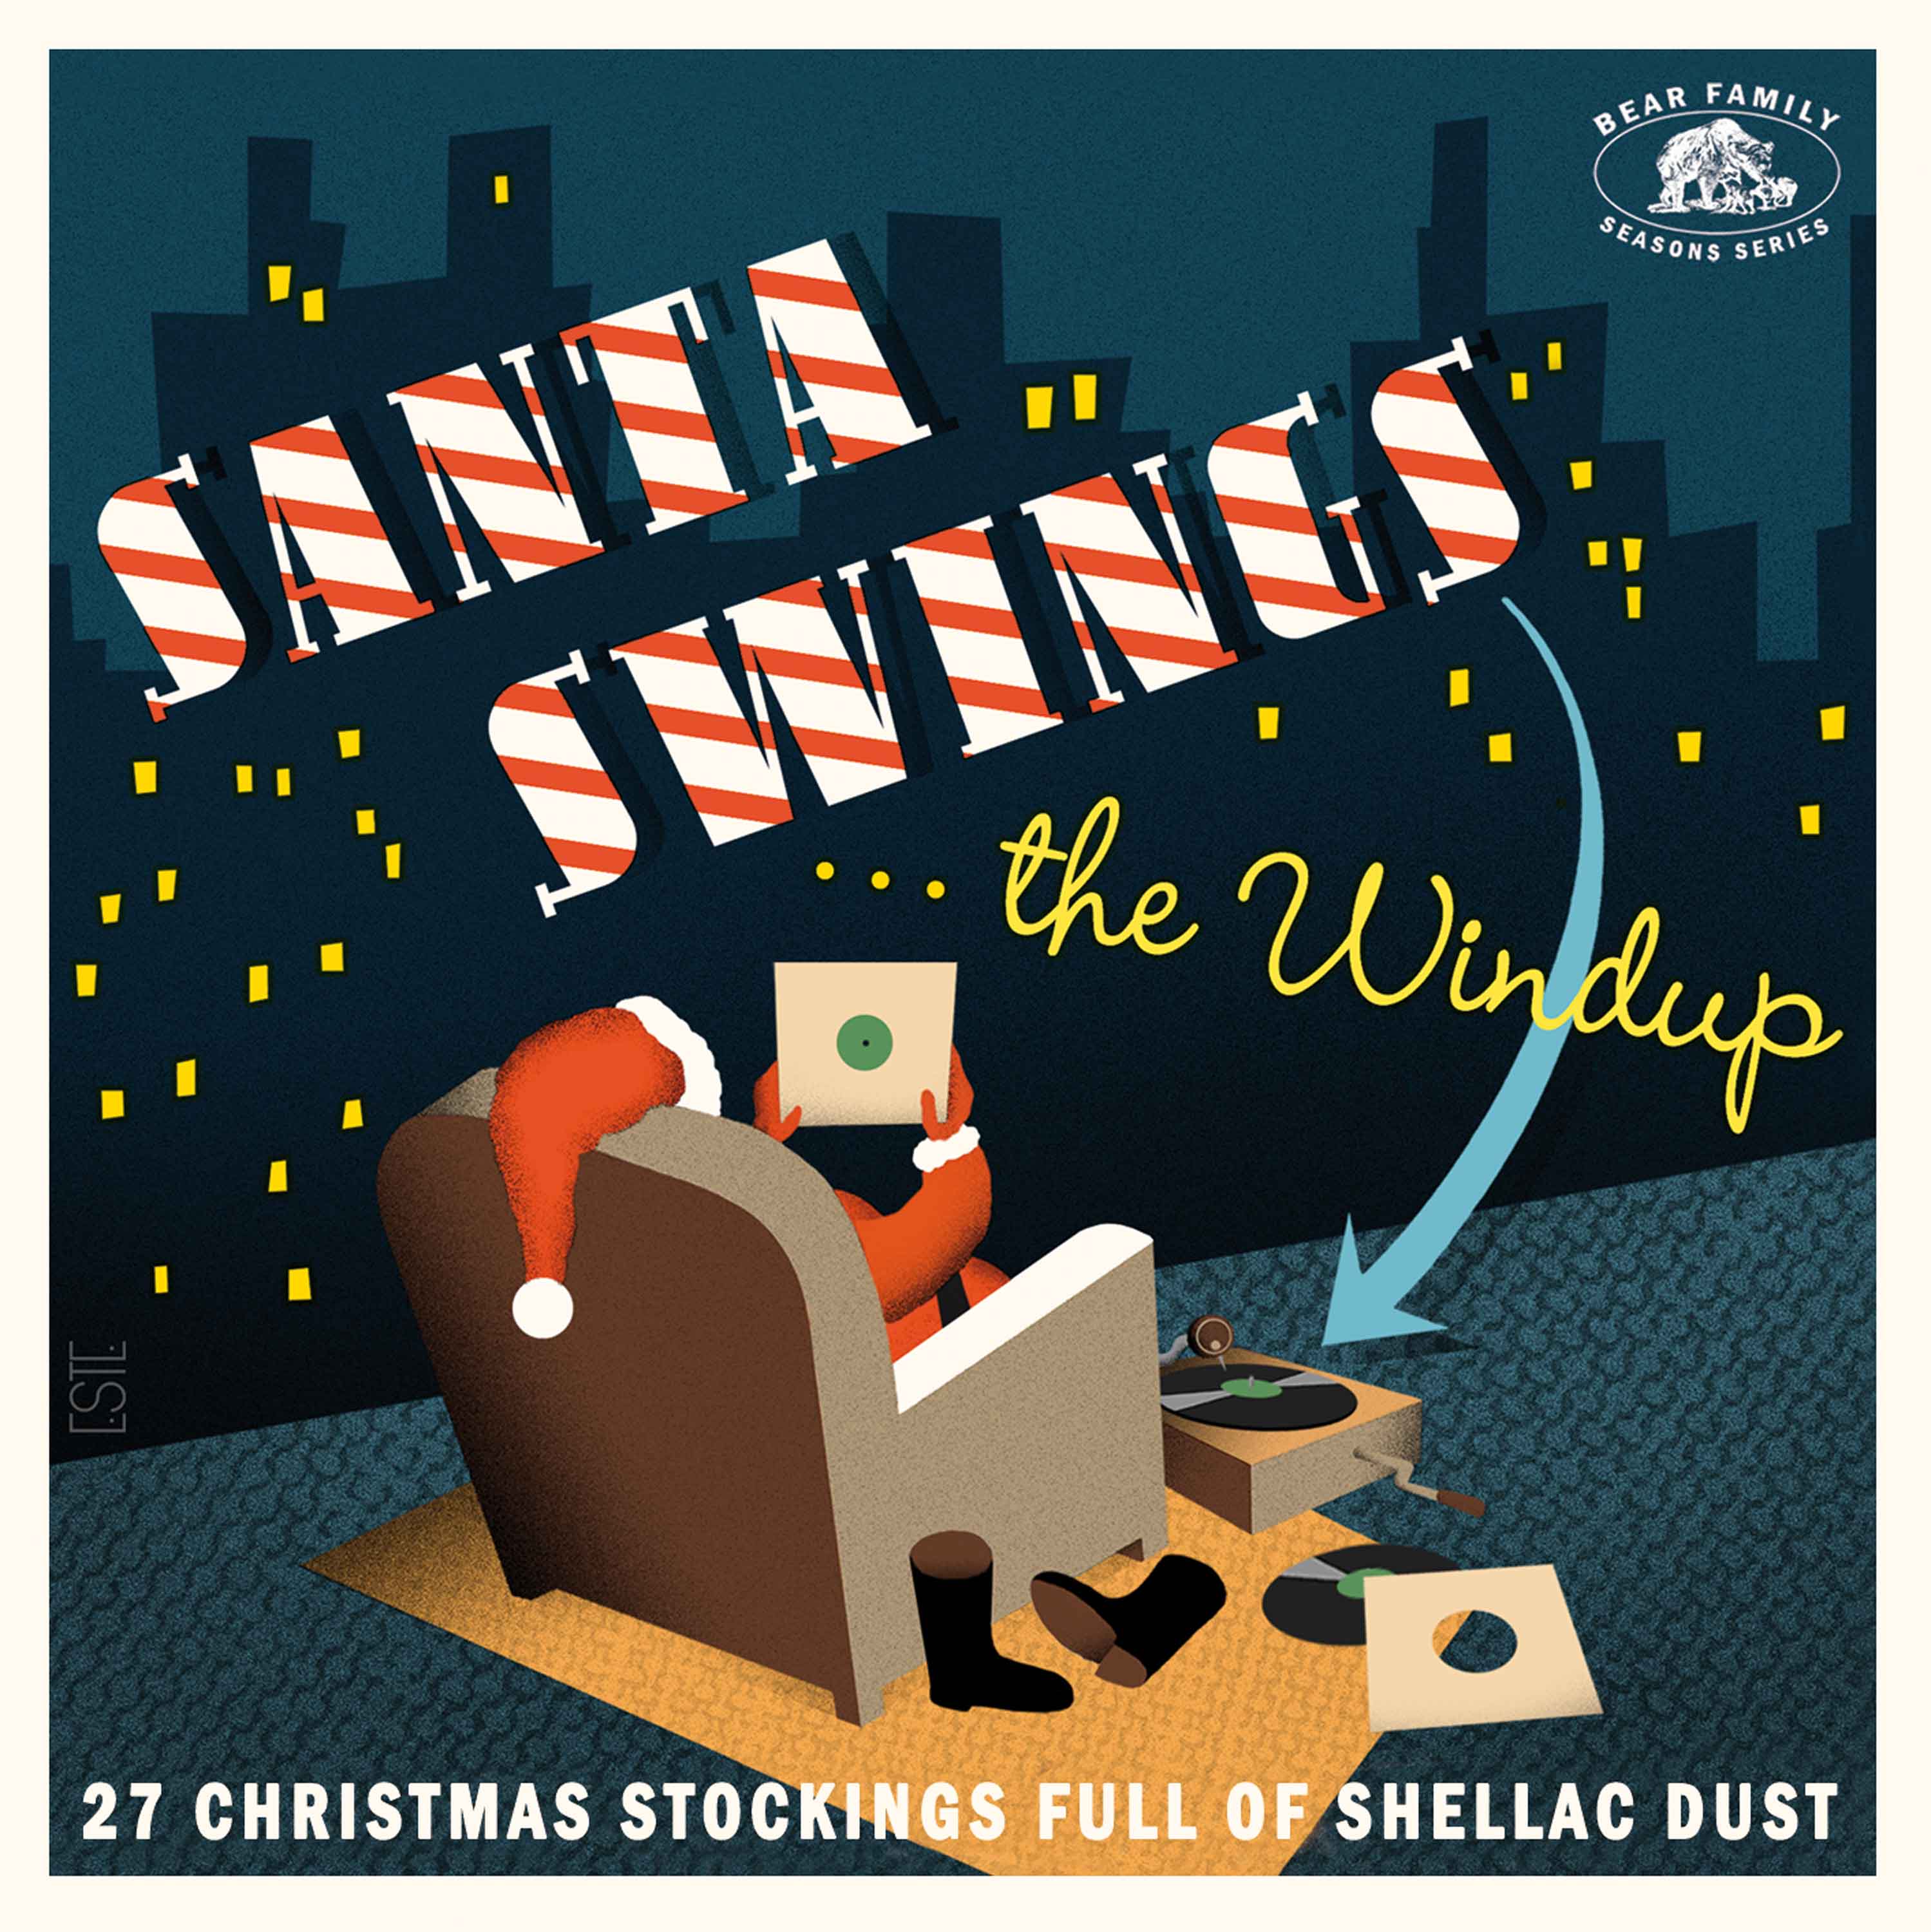 - Various - Stockings Santa 27 Christmas Records Of Full Shellac CD: Windup Swings Bear Season\'s Family - Greetings Dust (CD) The